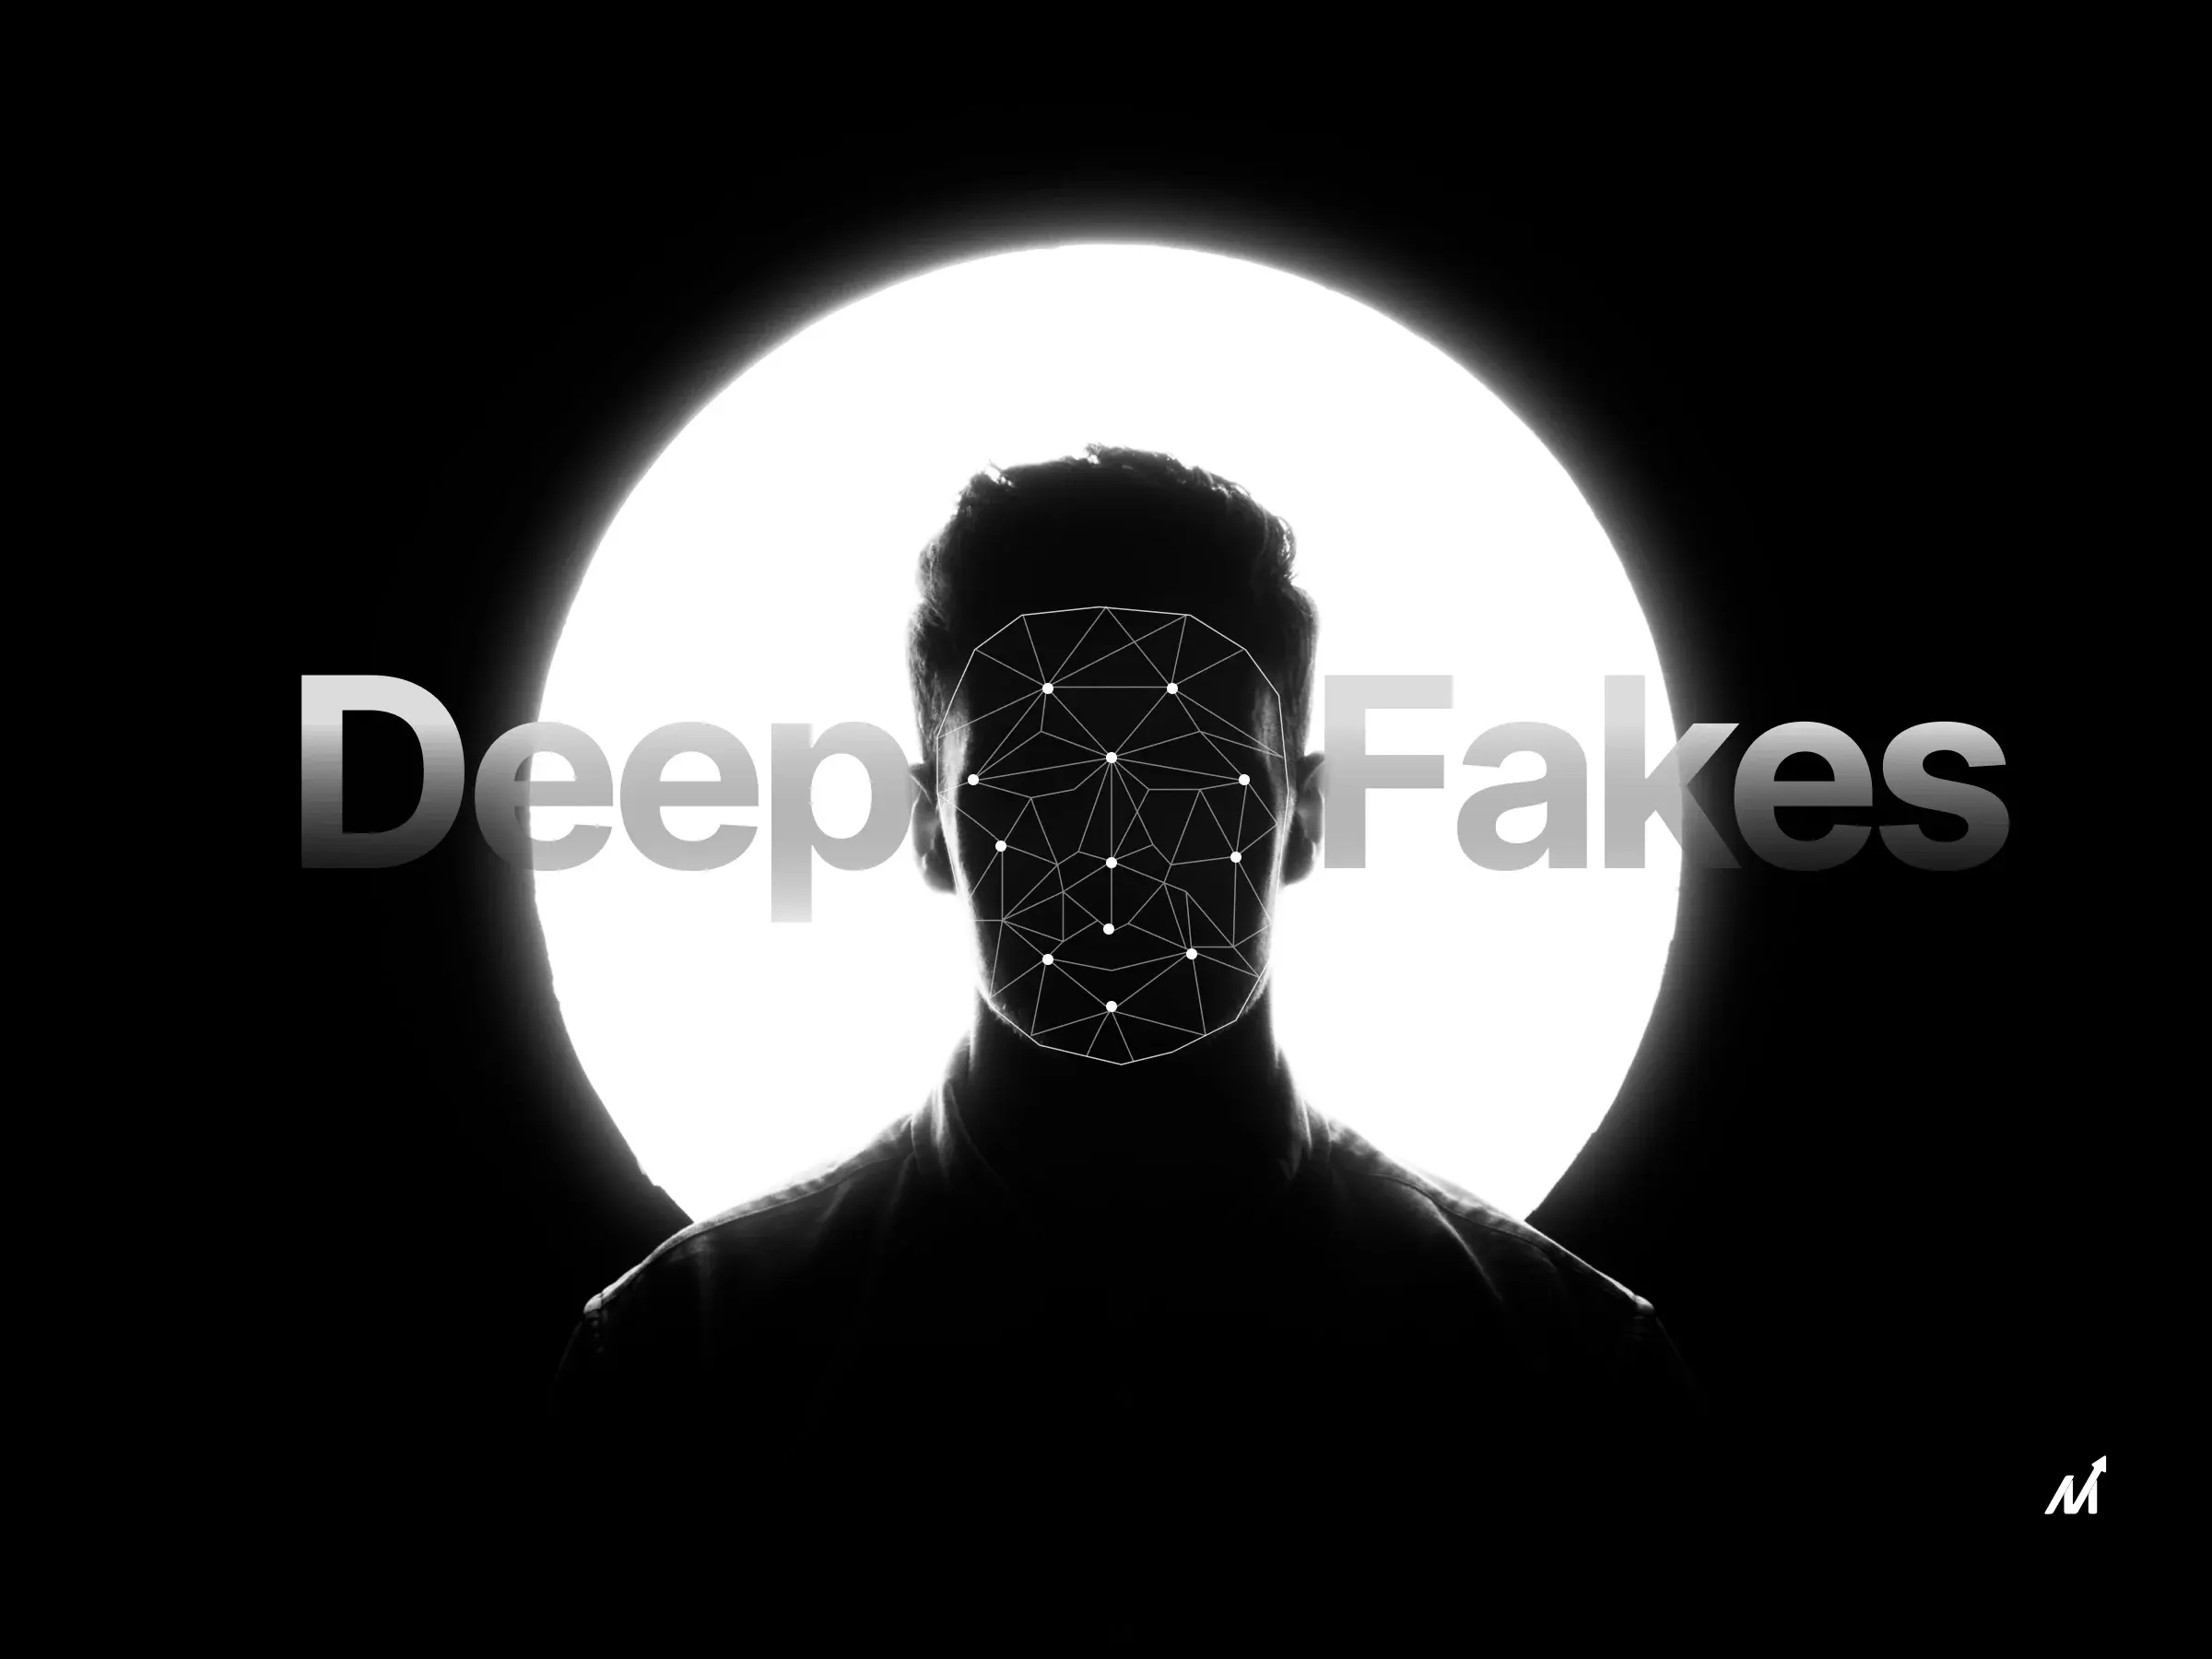 Dwayne The Rock Johnson As Dora The Explorer DeepFake Video!, Dwayne  Johnson, deepfake